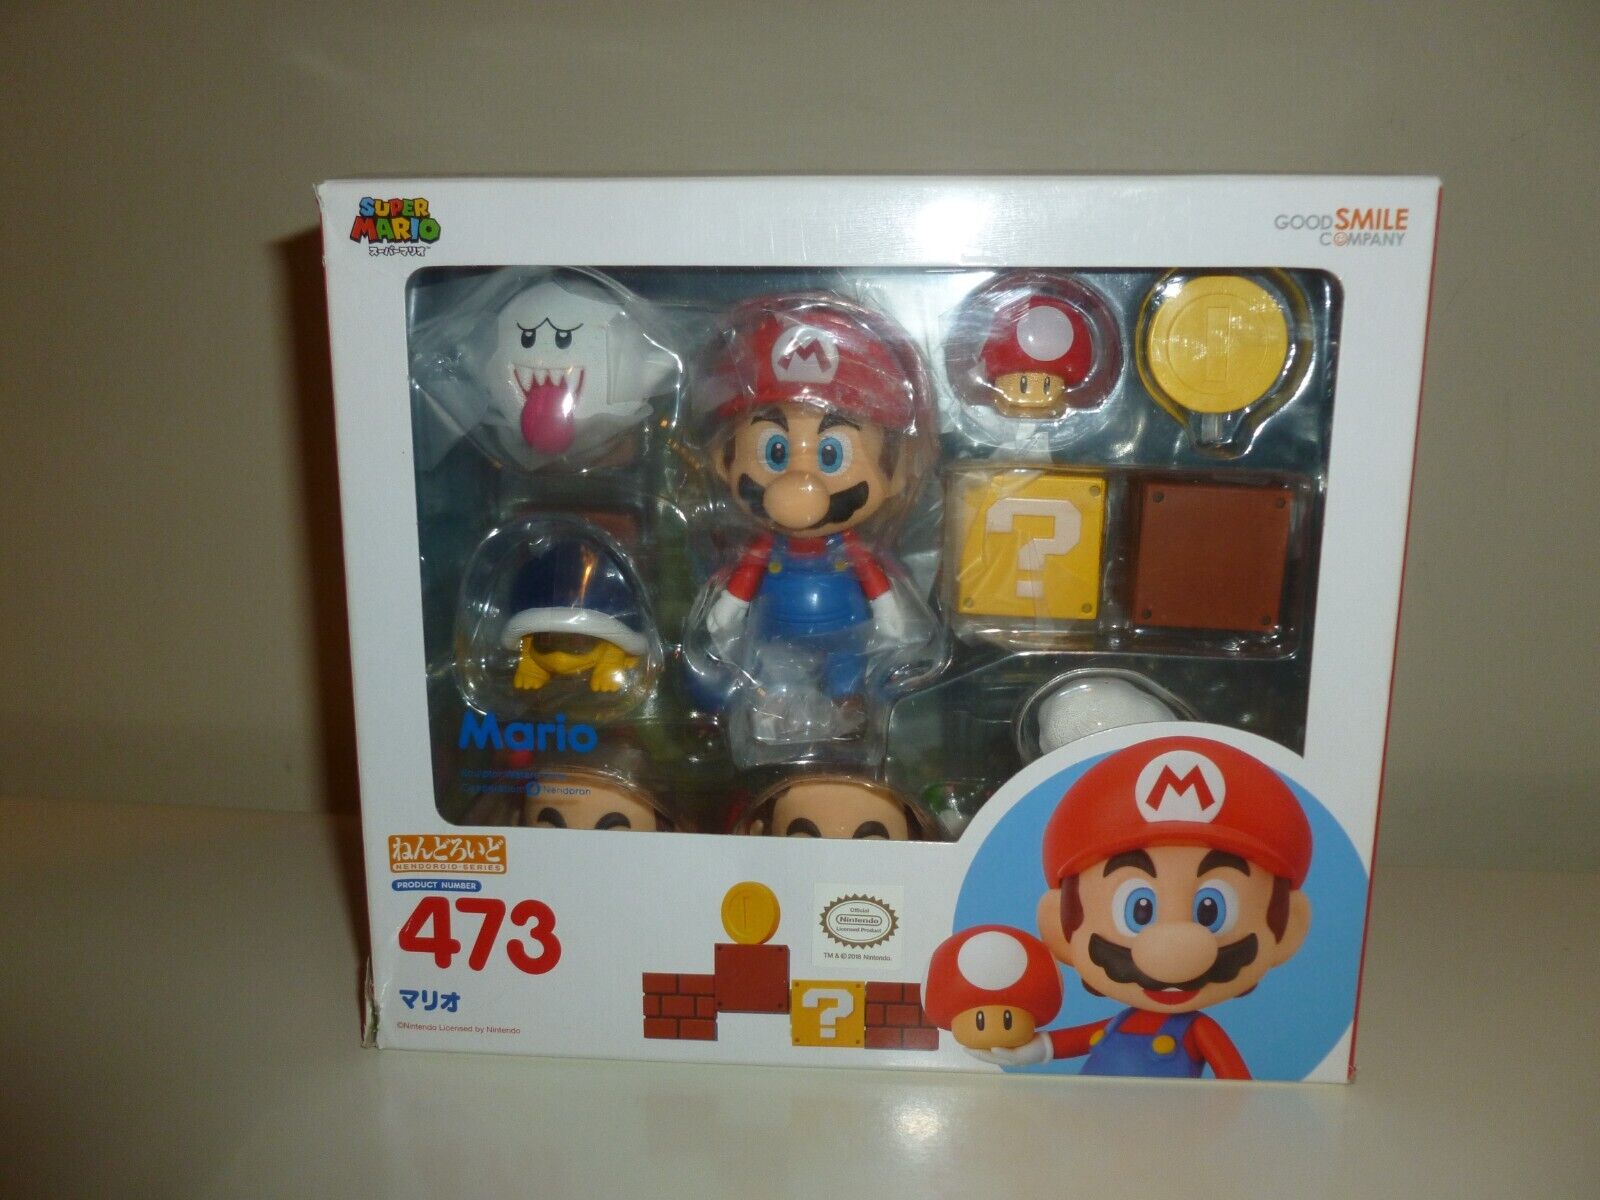 AUTHENTIC Good Smile Nendoroid 473 Super Mario Nintendo new*Scuffed/dented box*